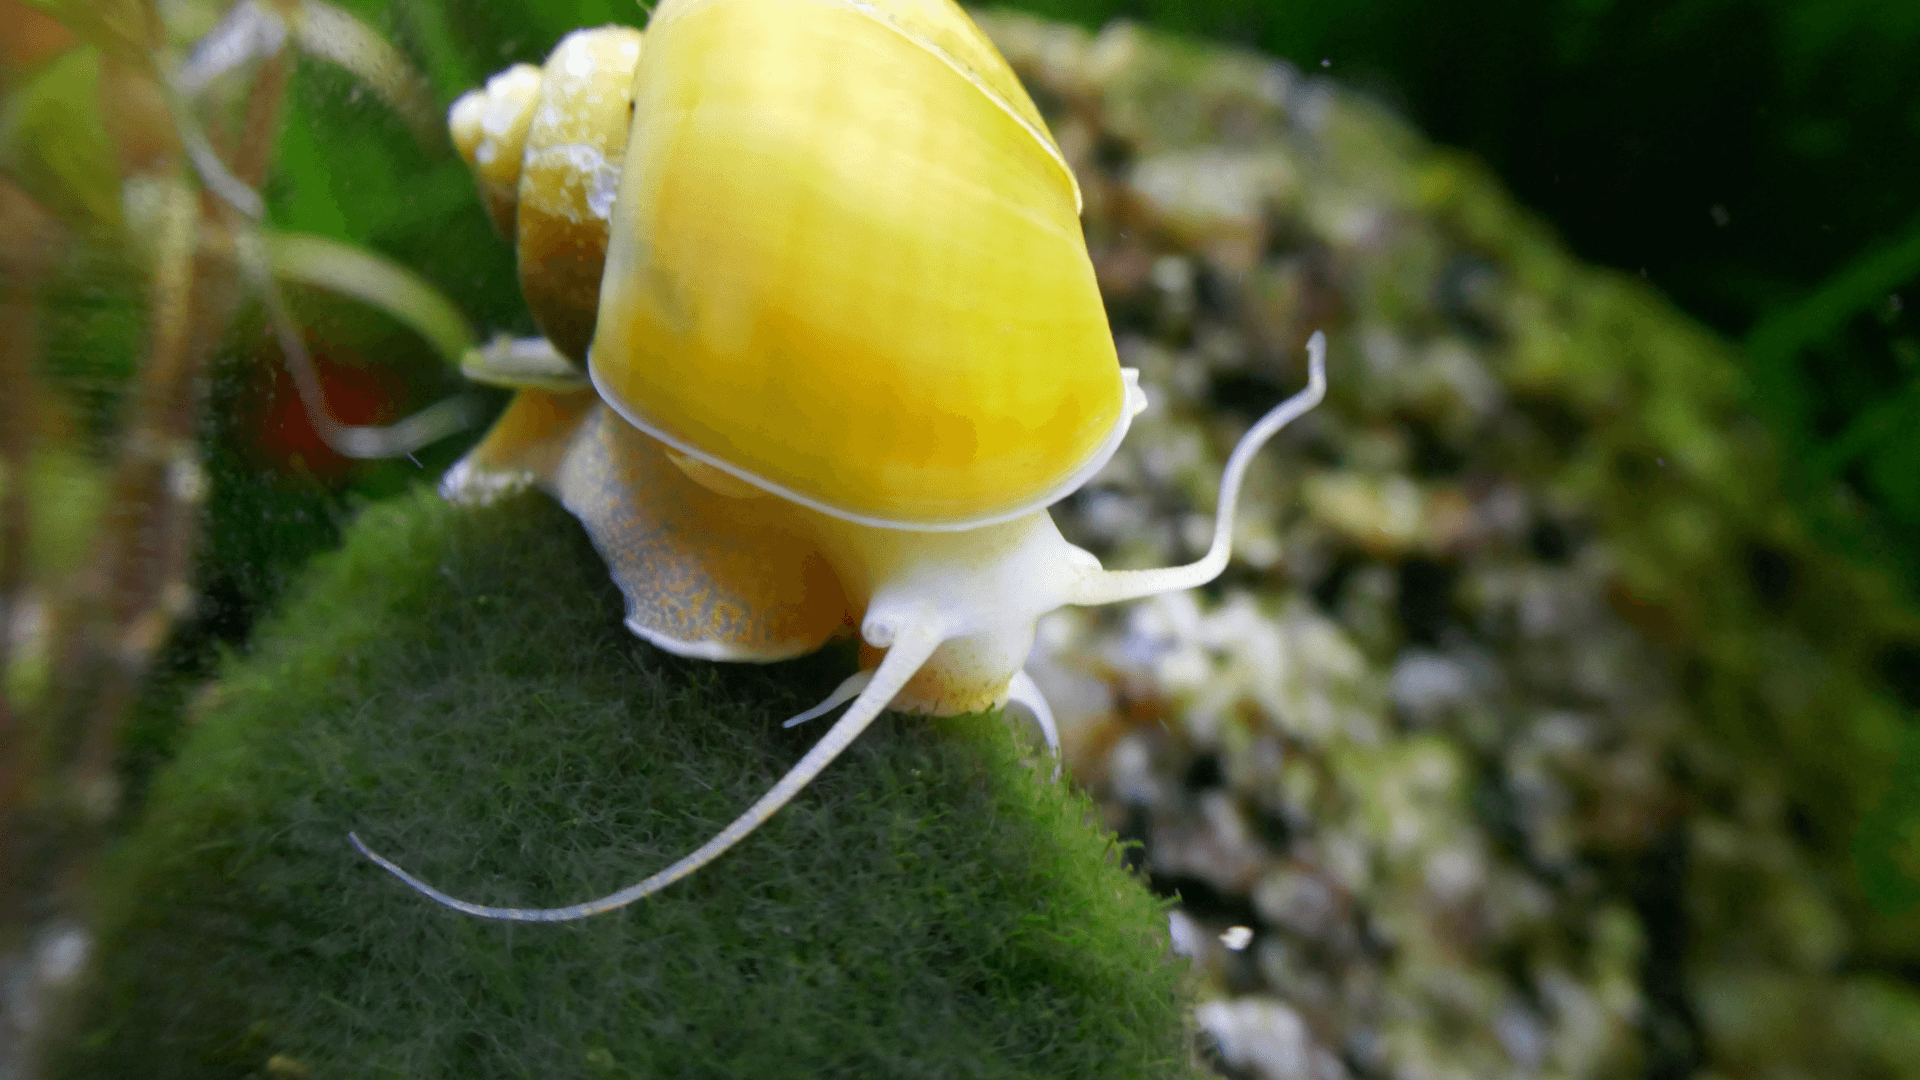 A photo of Snails